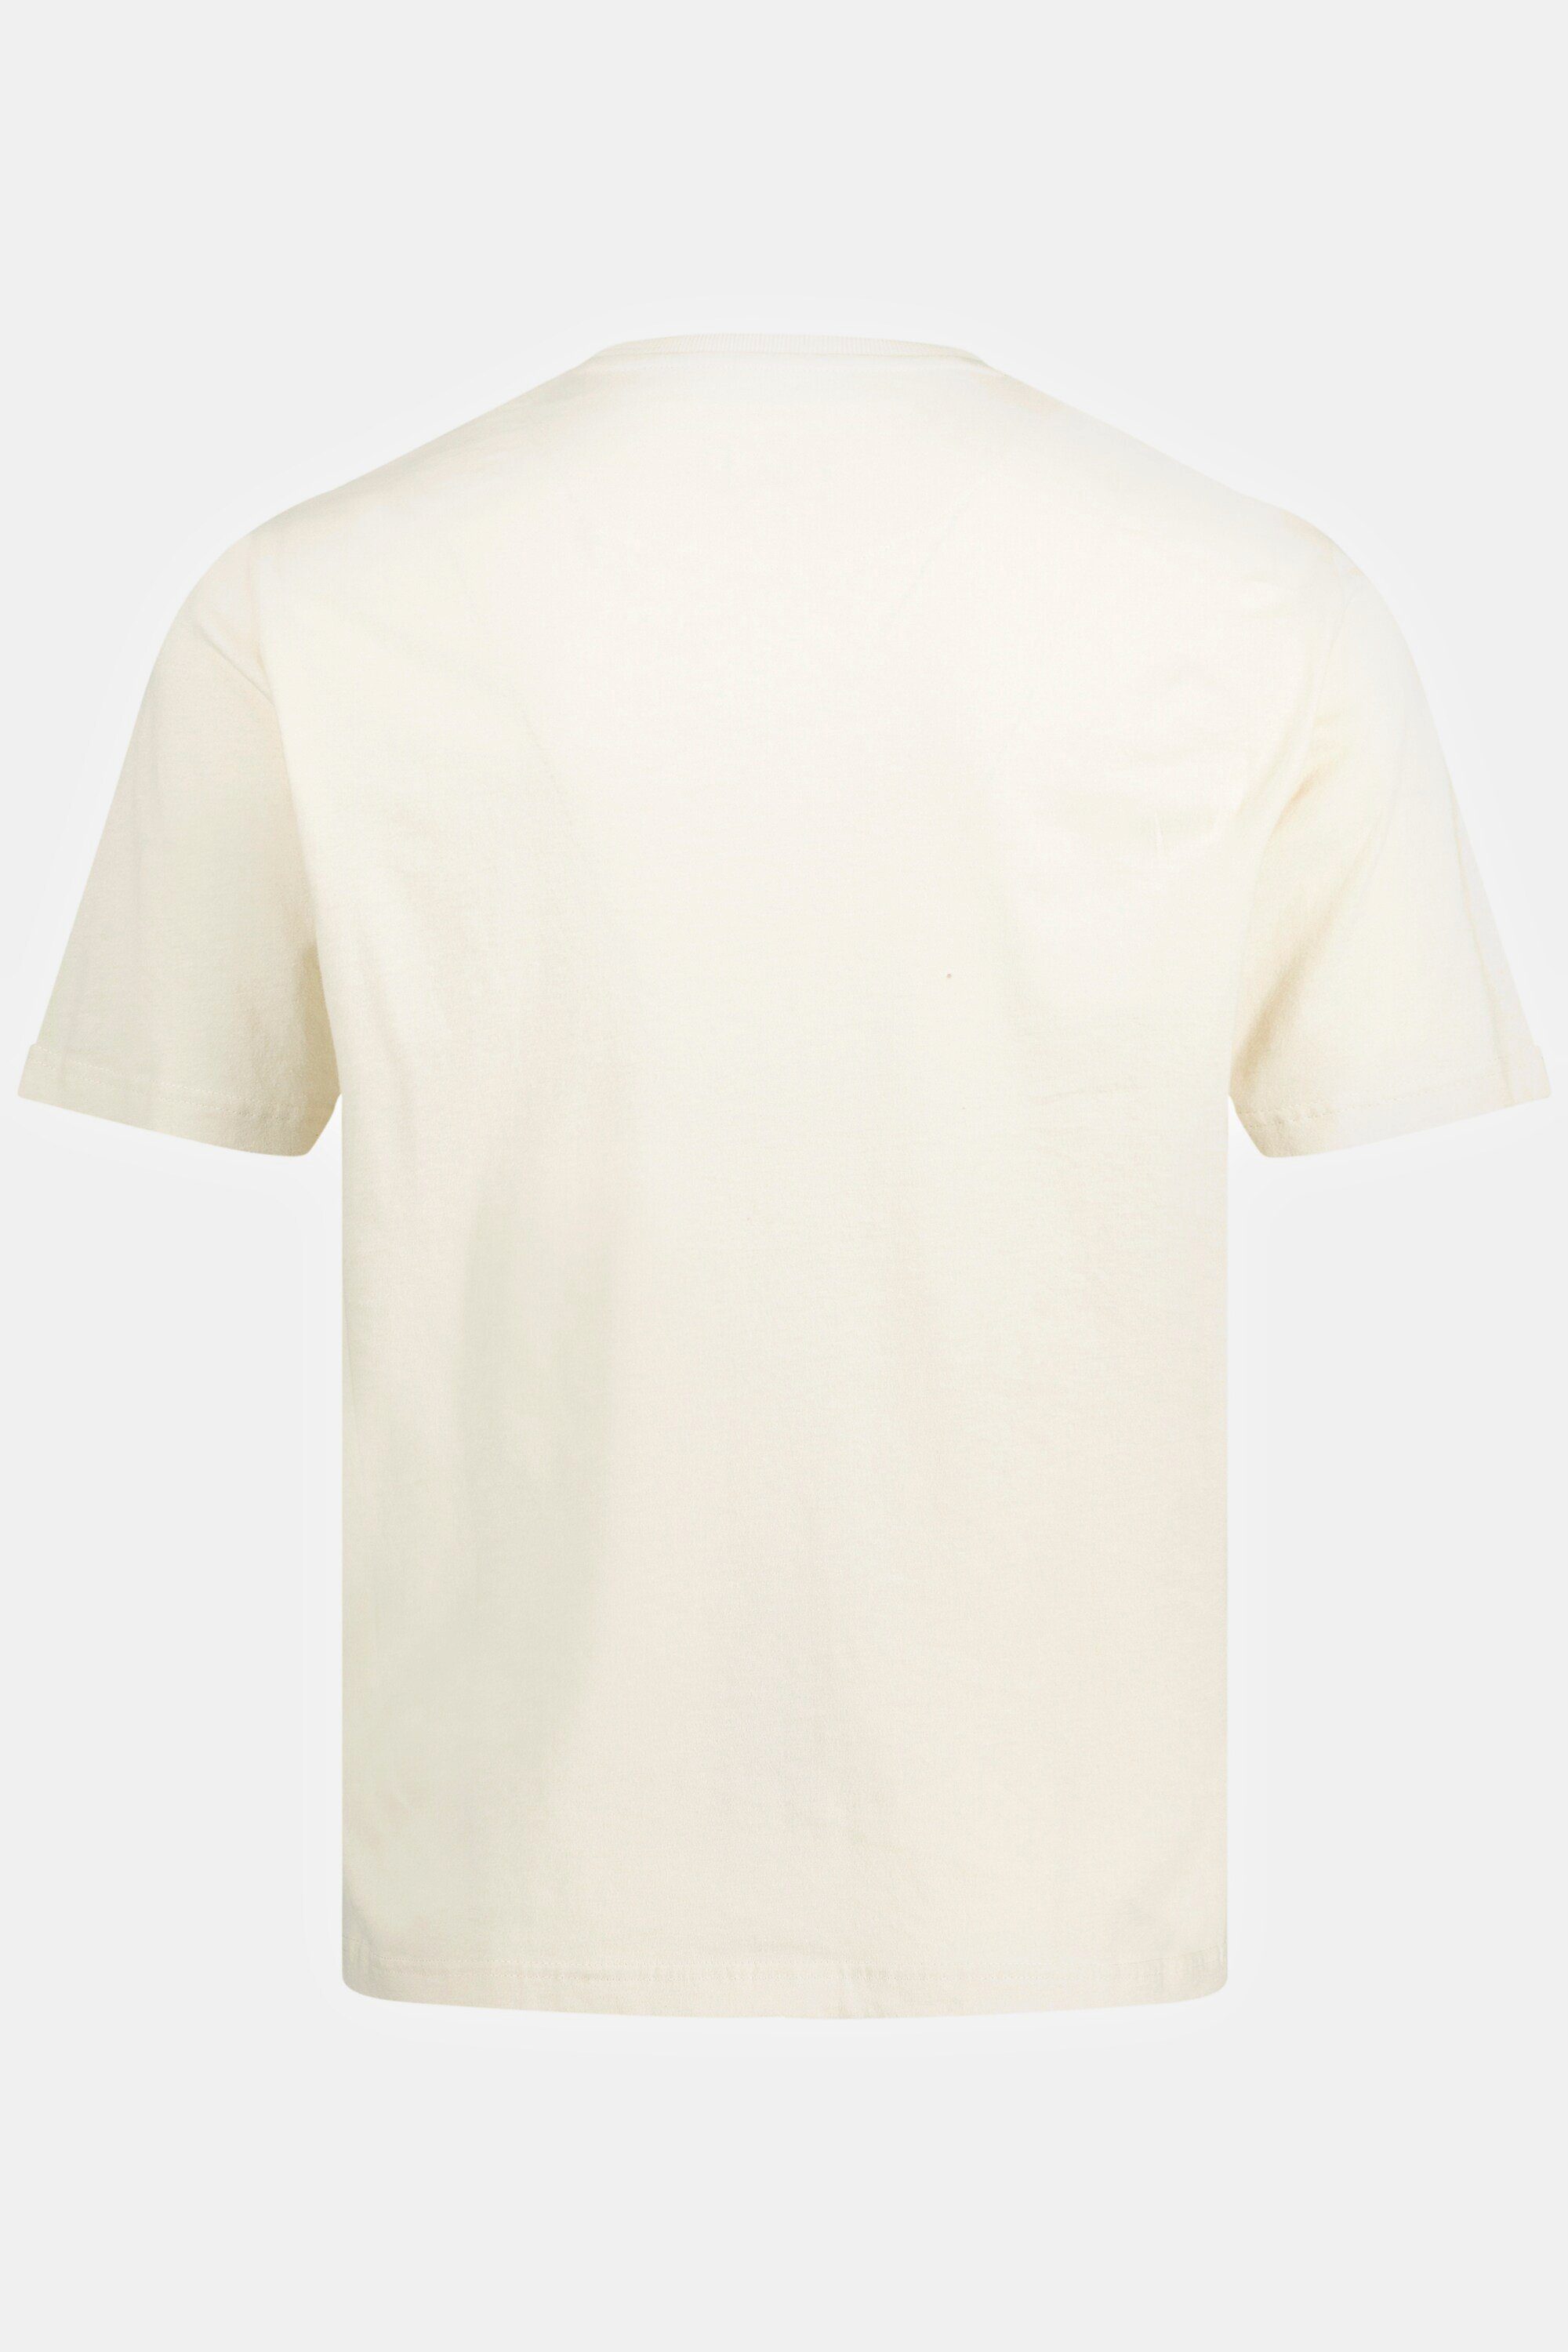 JP1880 T-Shirt T-Shirt Halbarm Print Rundhals